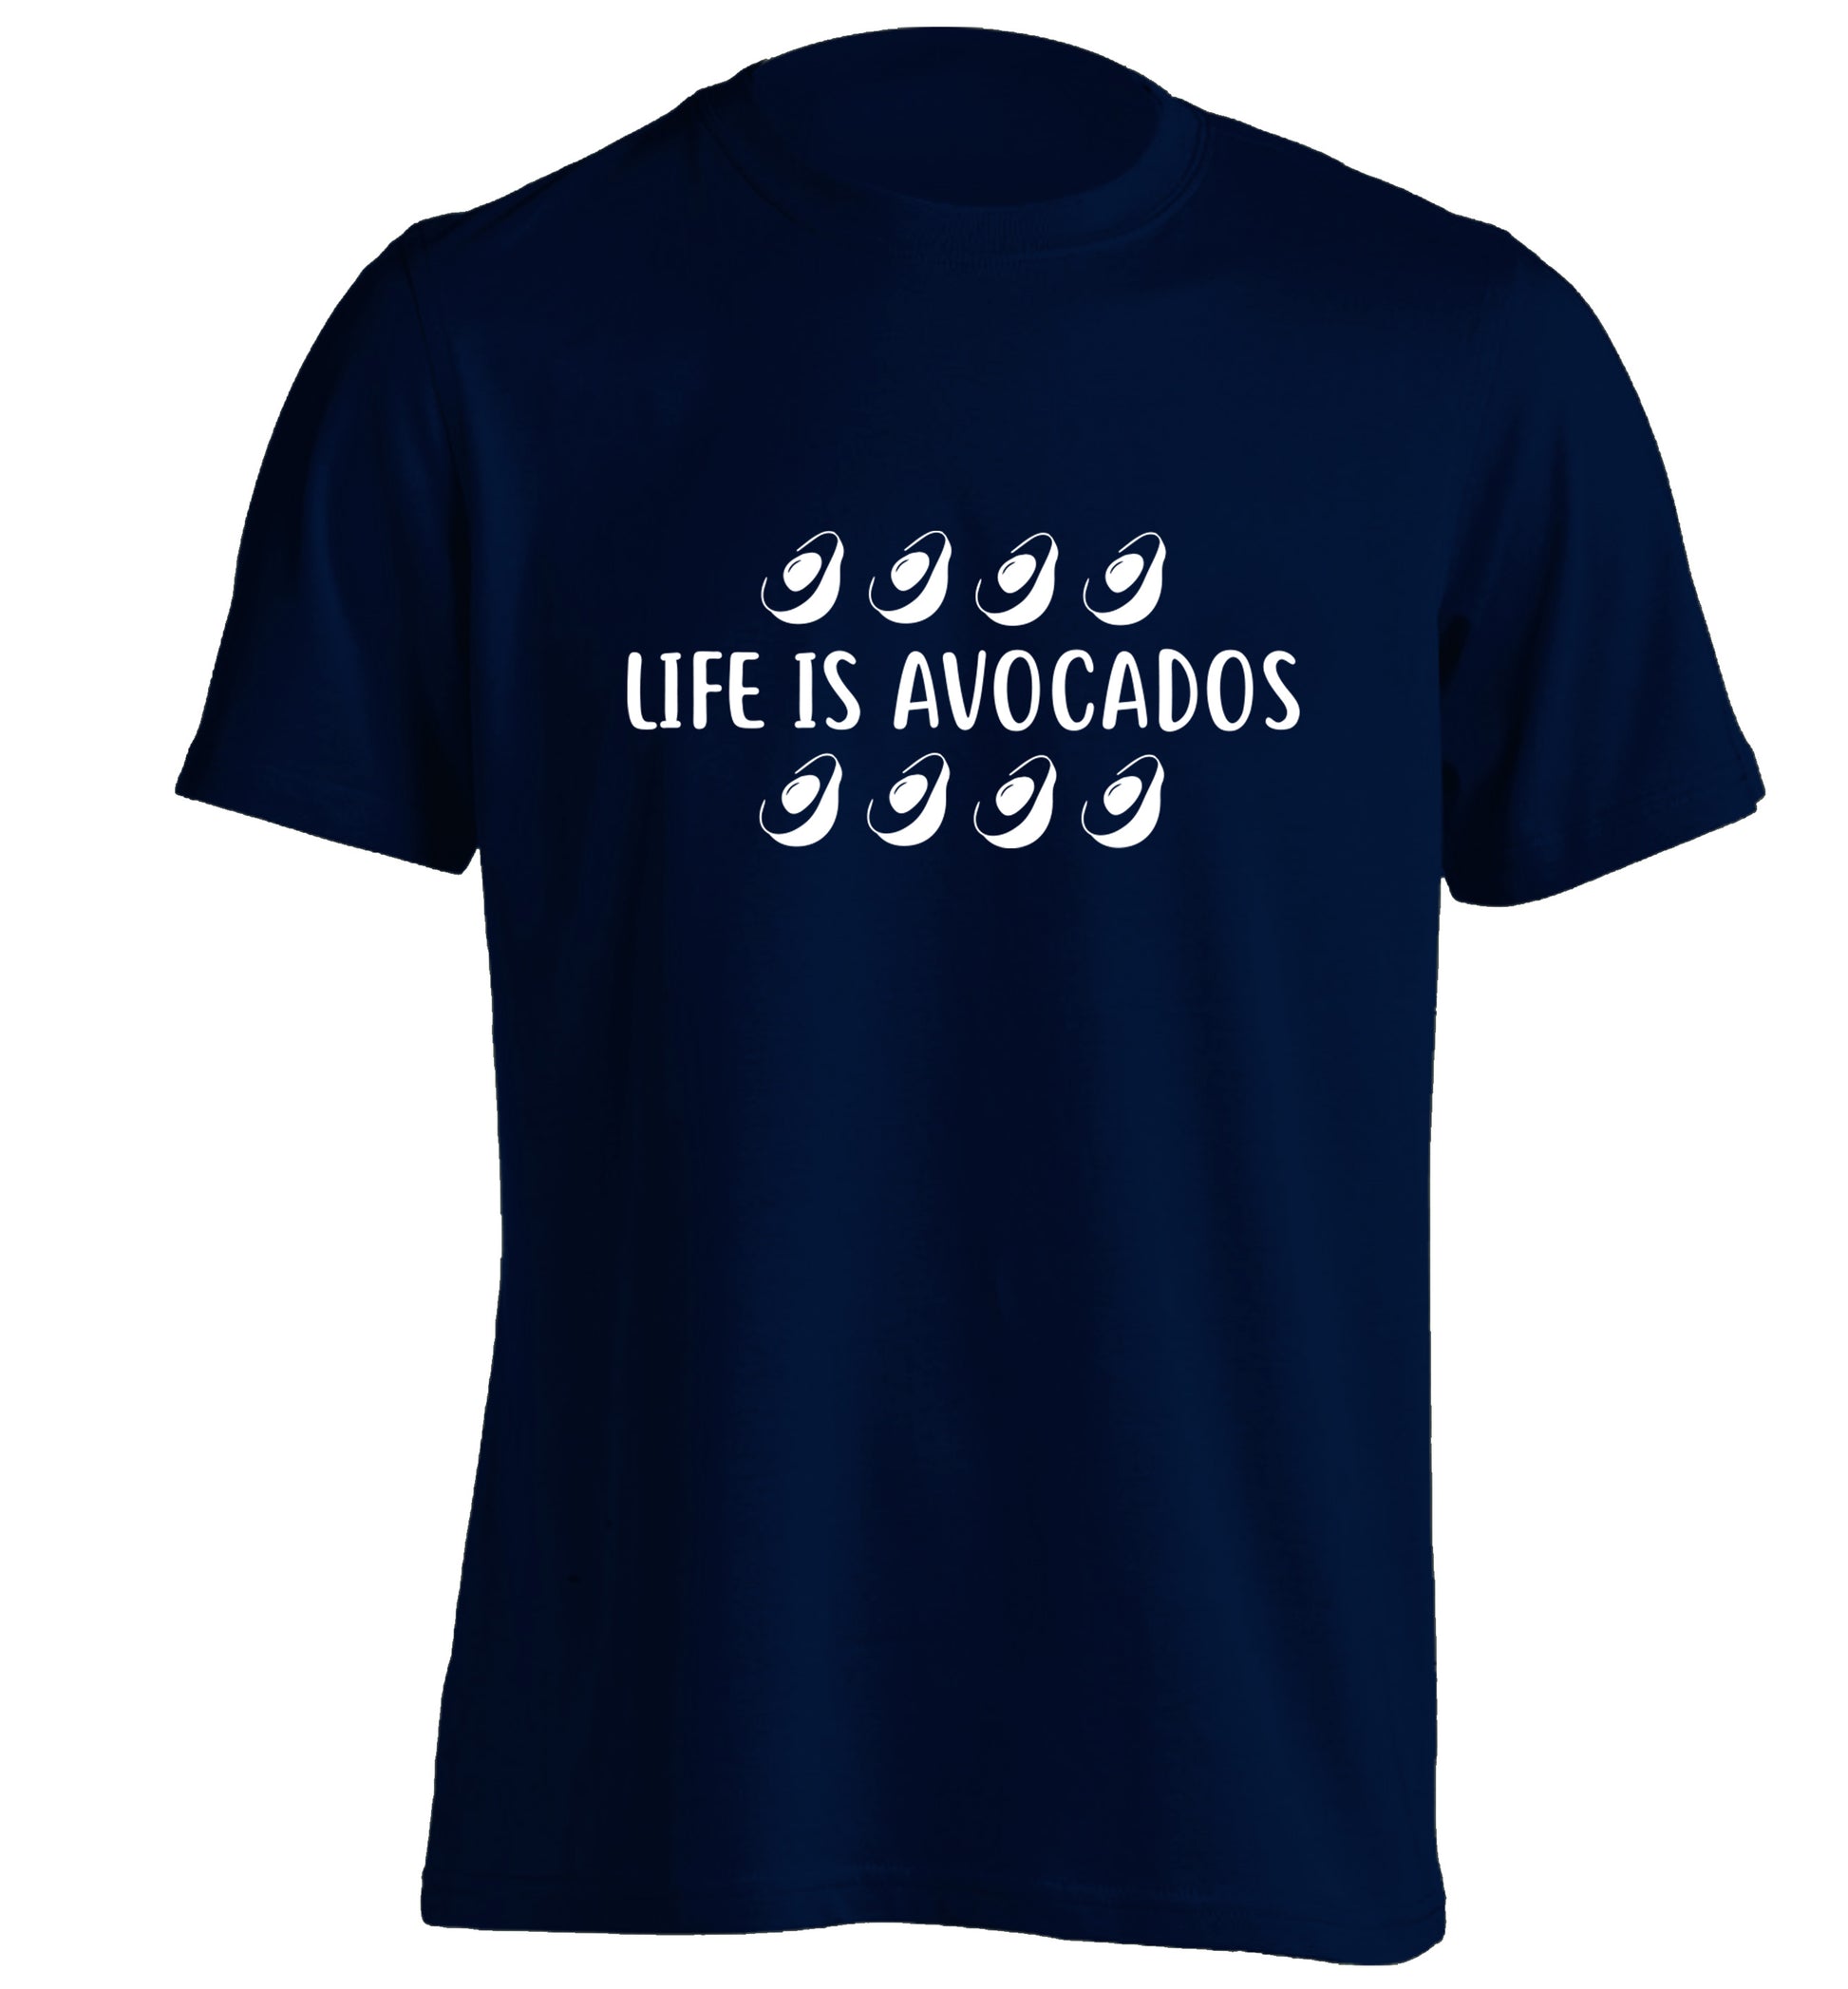 Life is avocados adults unisex navy Tshirt 2XL